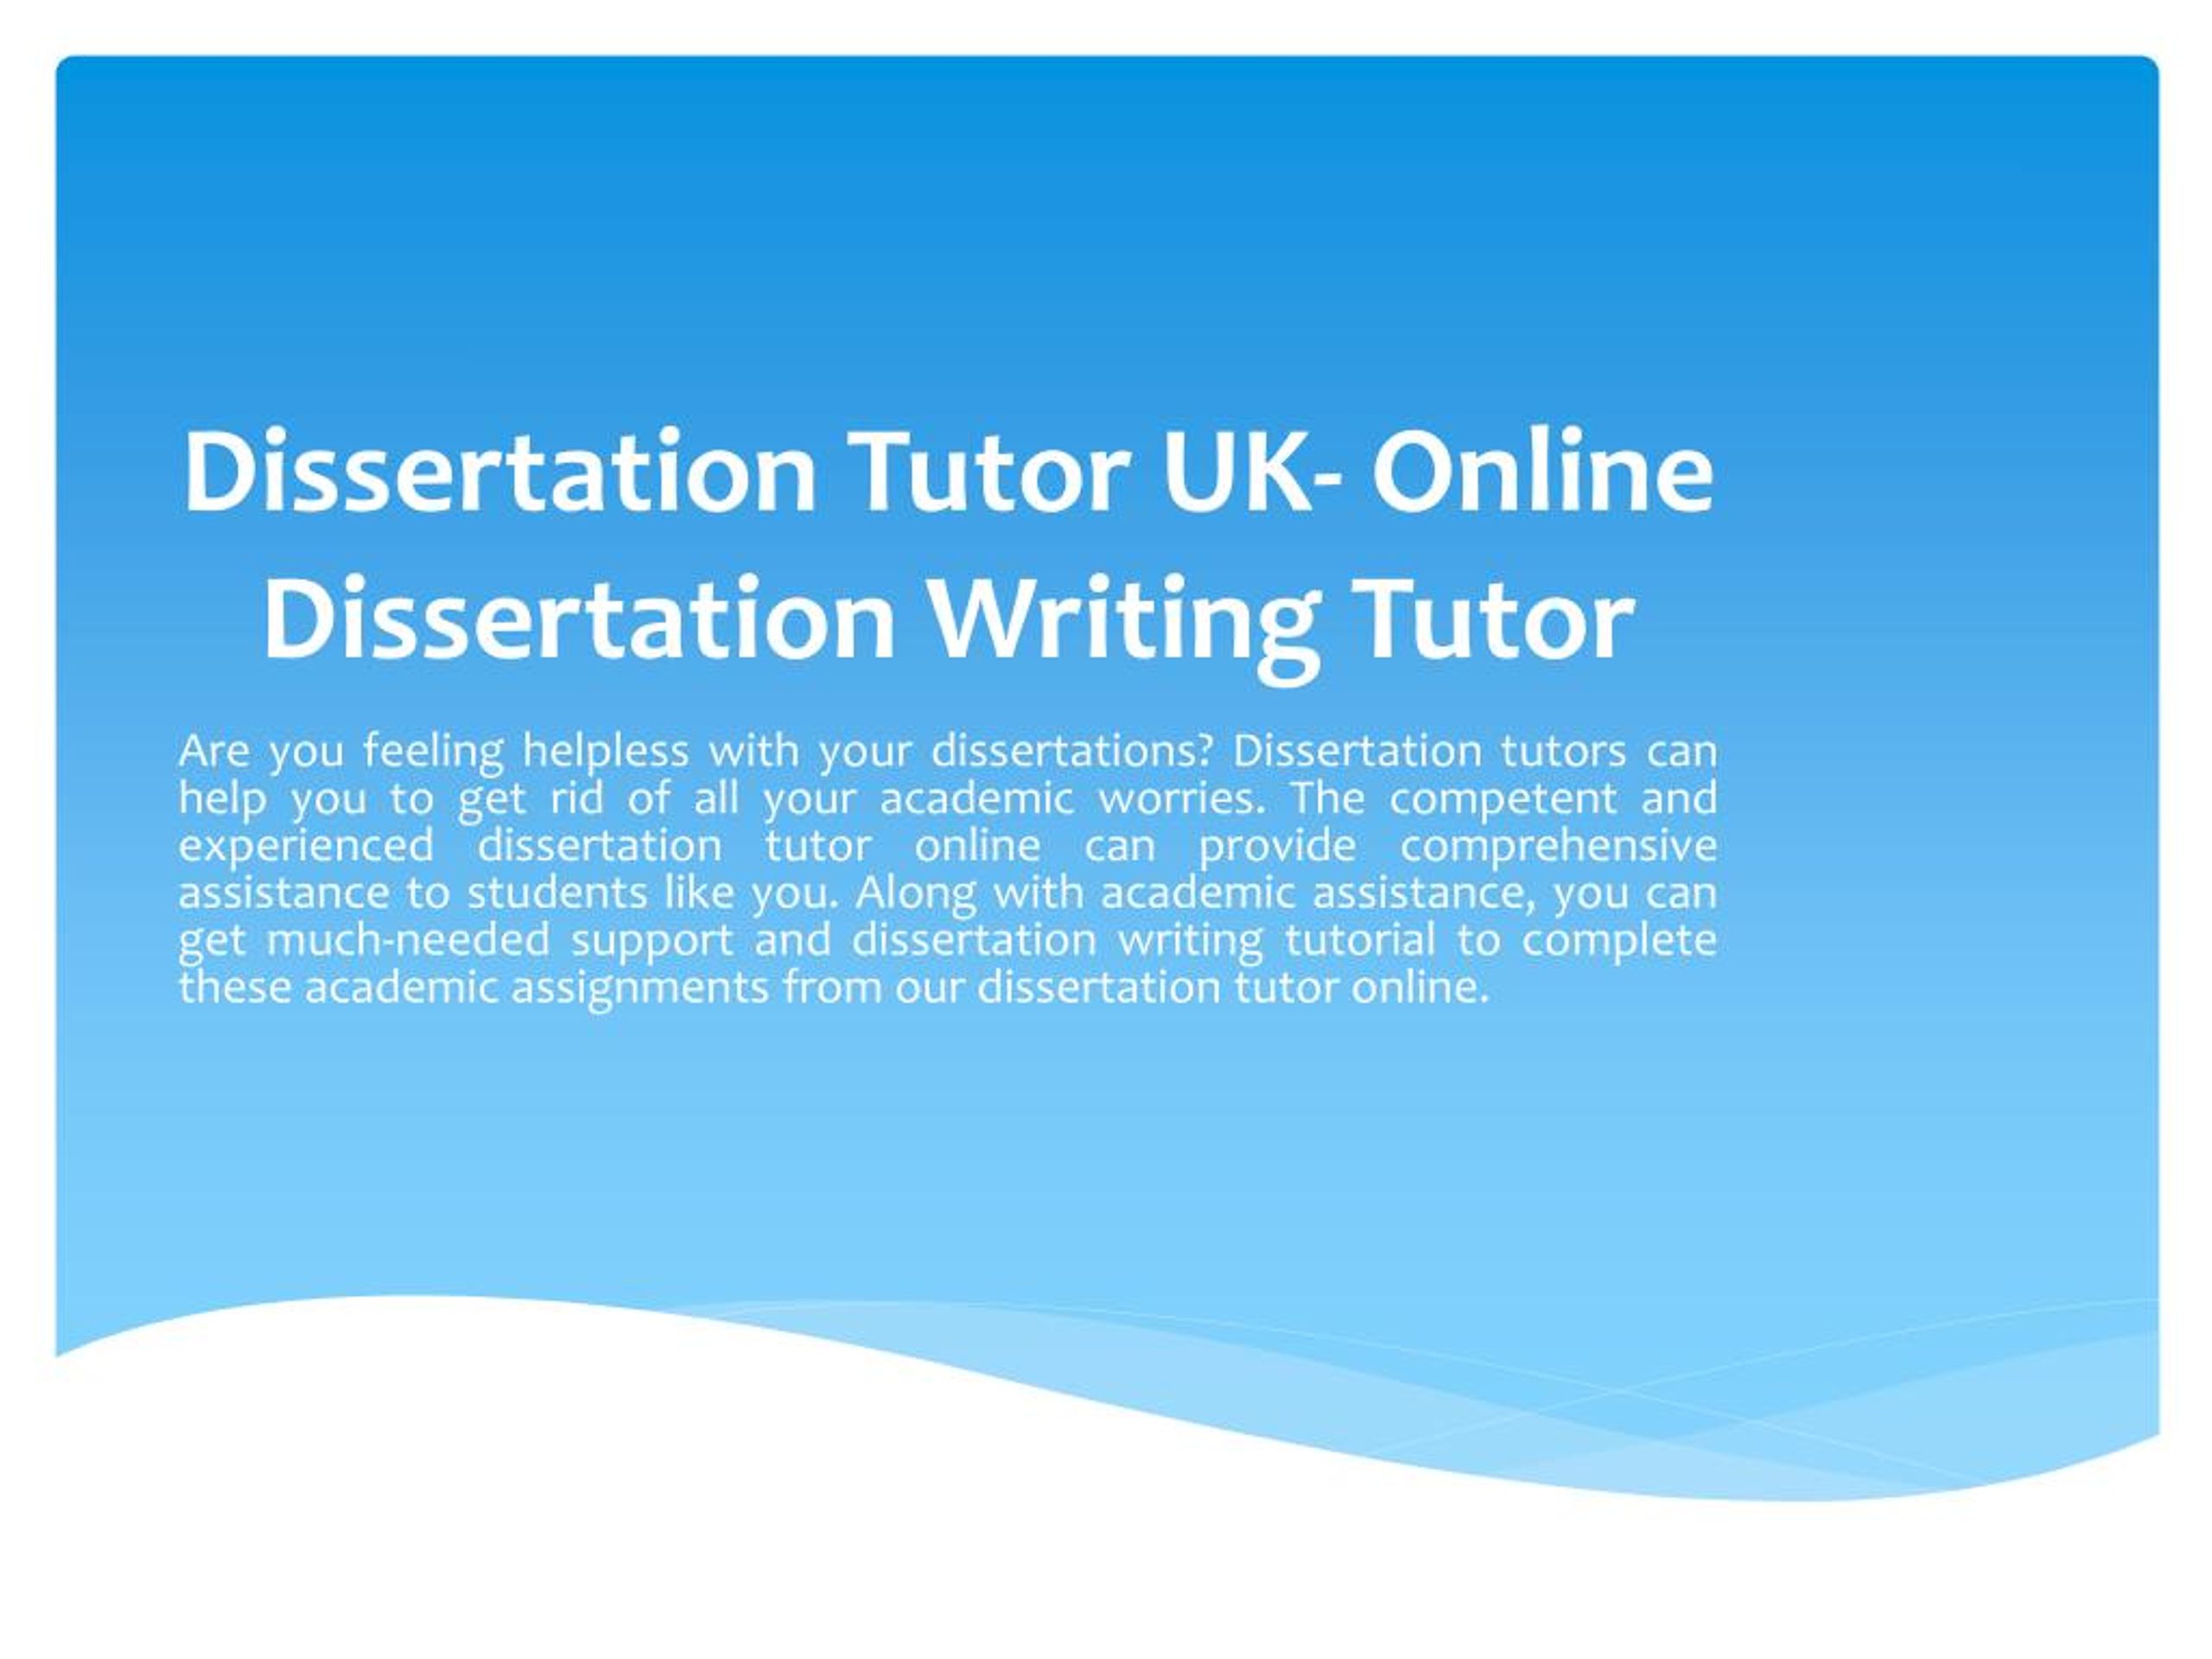 Dissertation help tutor